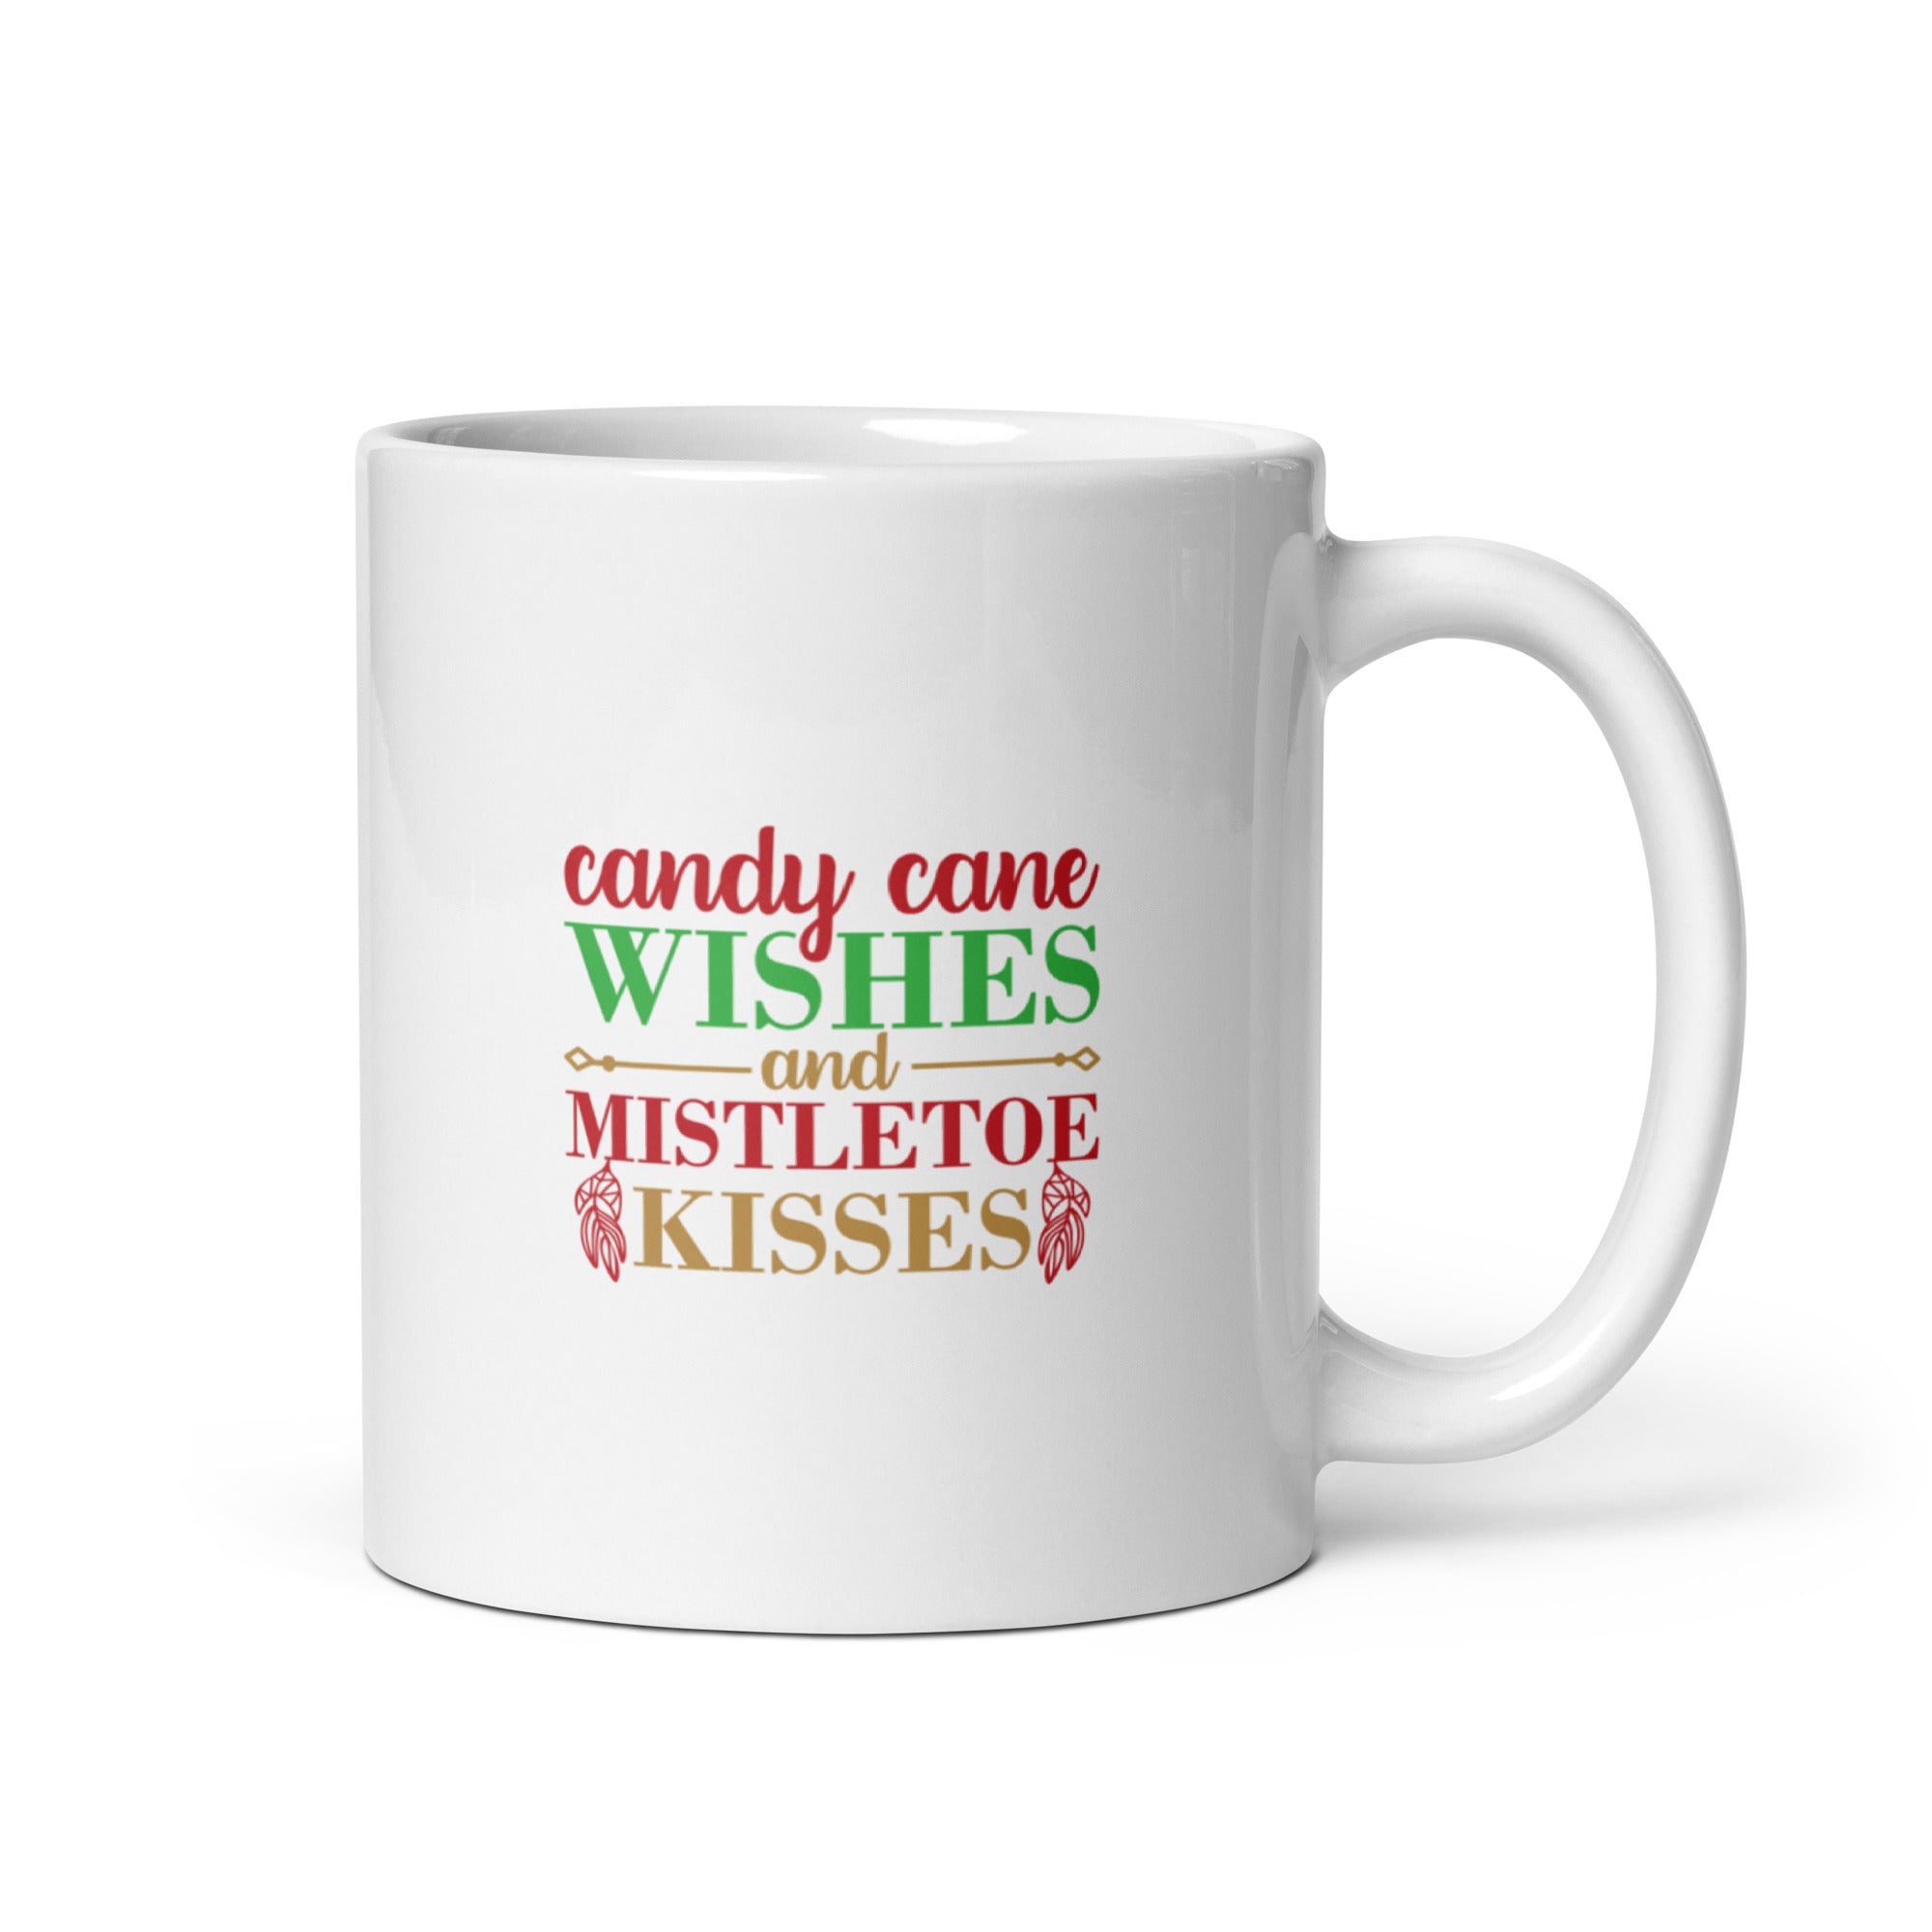 Mistletoe Kisses - White glossy mug